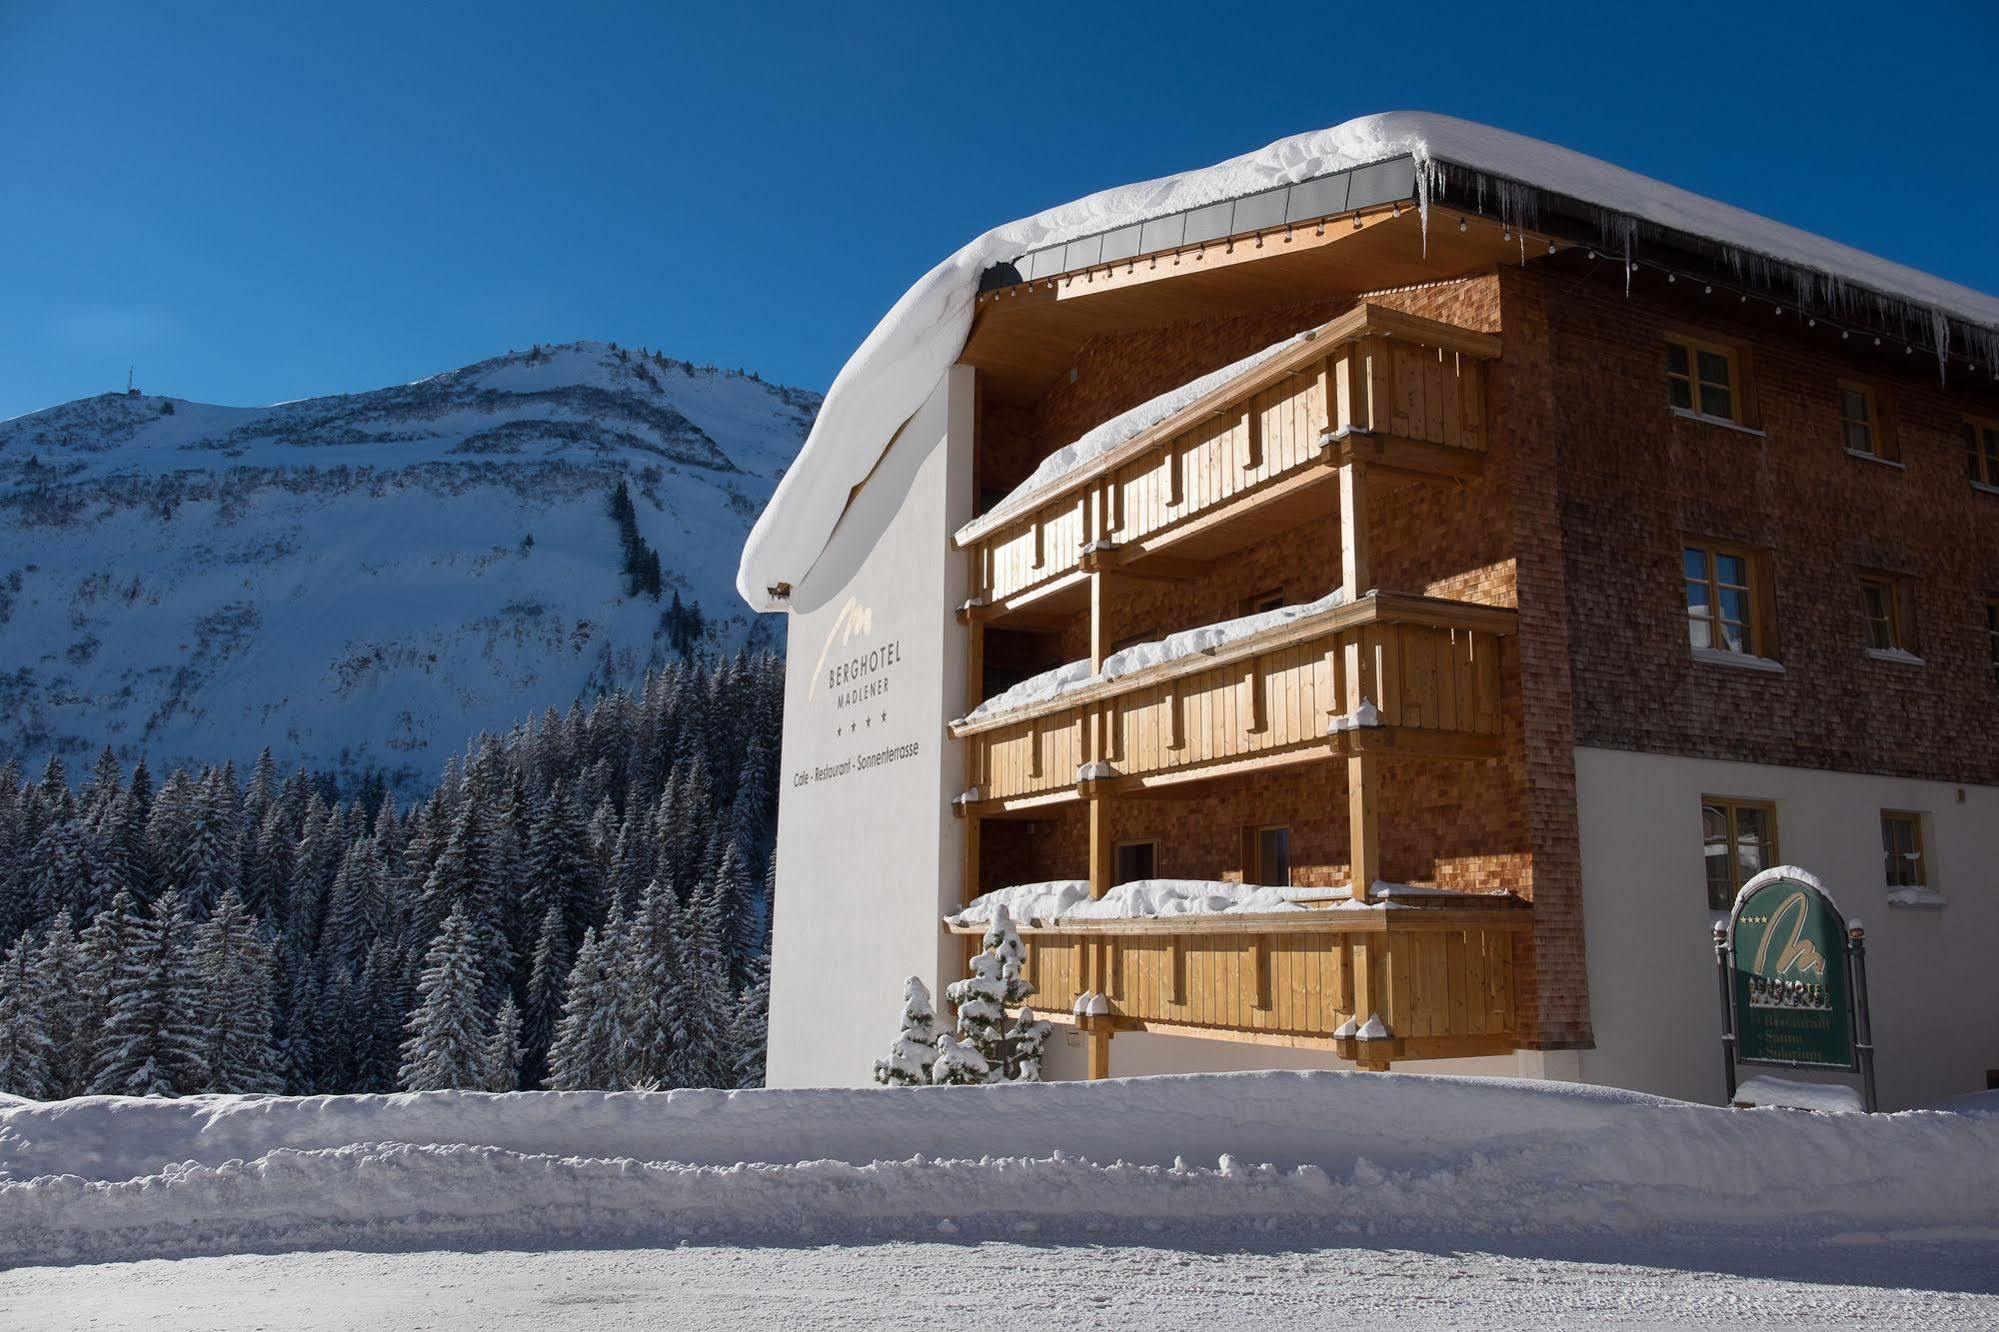 Das Alpine Lifestyle Berghotel Madlener ダーミュルス エクステリア 写真